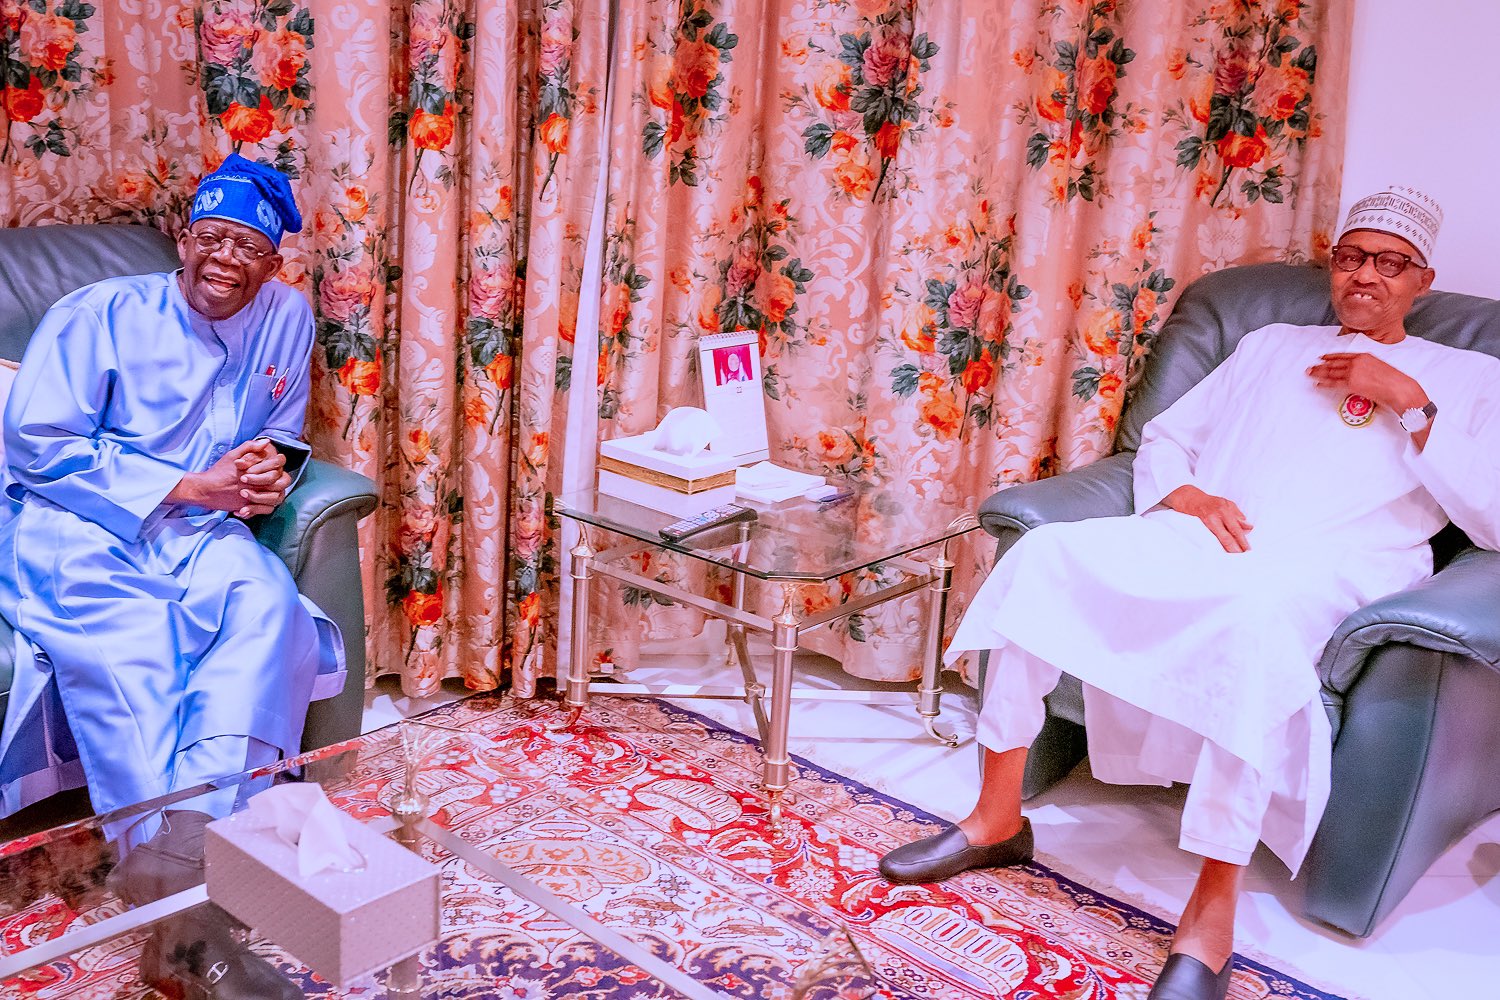 APC presidential candidate Bola Ahmed Tinubu and Nigeria's president Muhammadu Buhari. [PHOTO CREDIT: Bashir Ahmad]